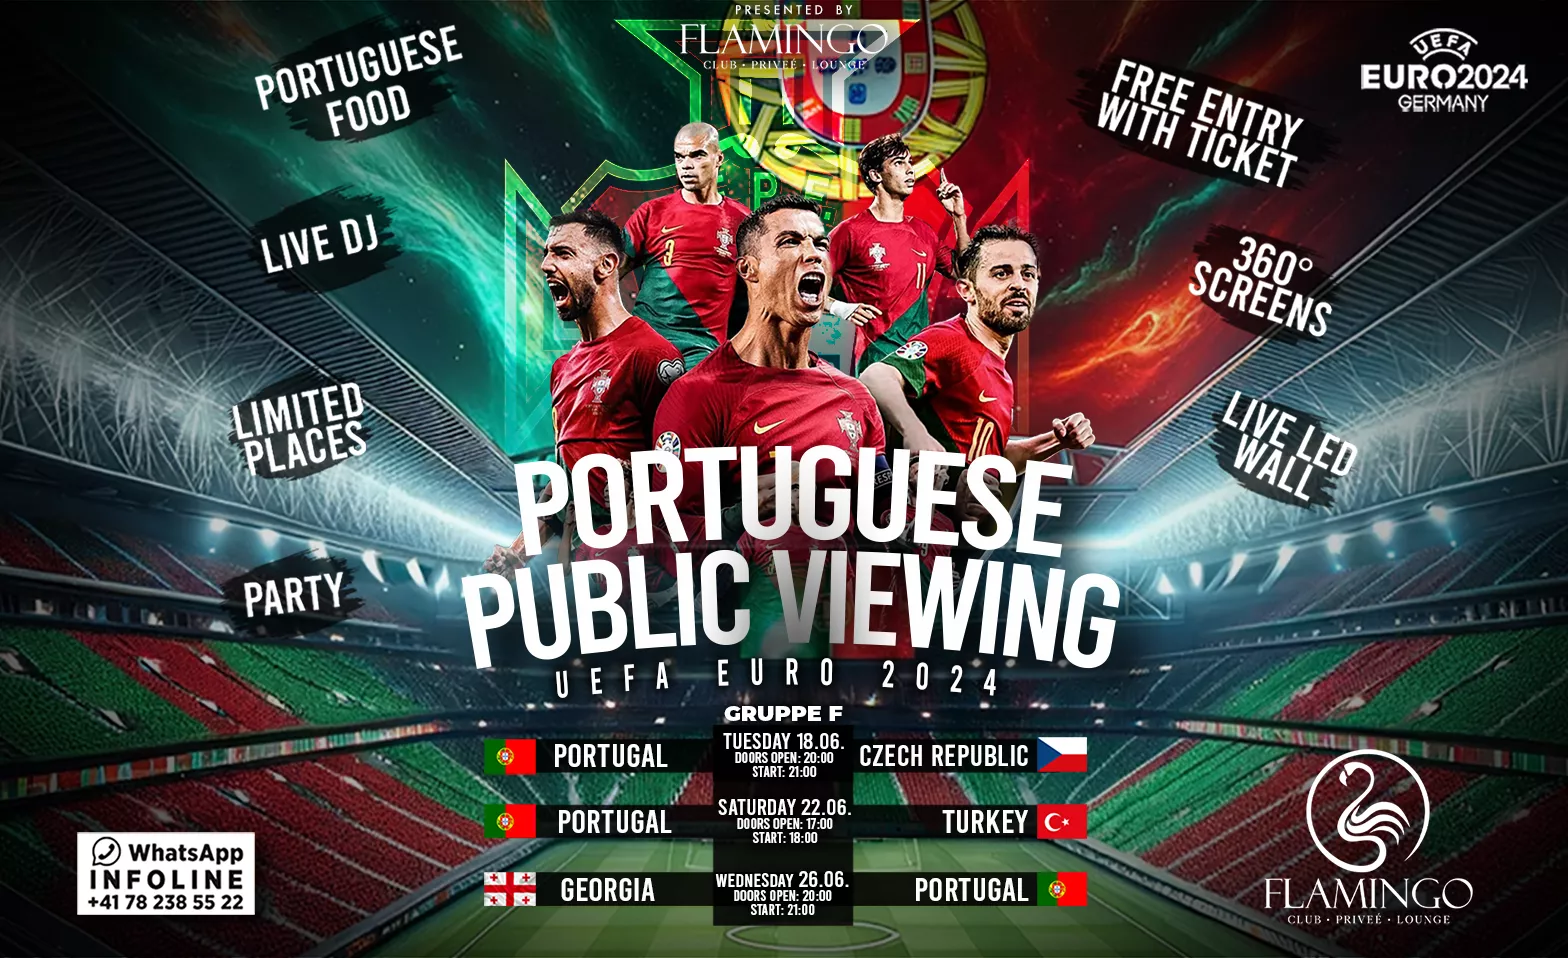 Event-Image for 'PORTUGAL PUBLIC VIEWING - PORTUGAL VS CZECH @ FLAMINGO CLUB'